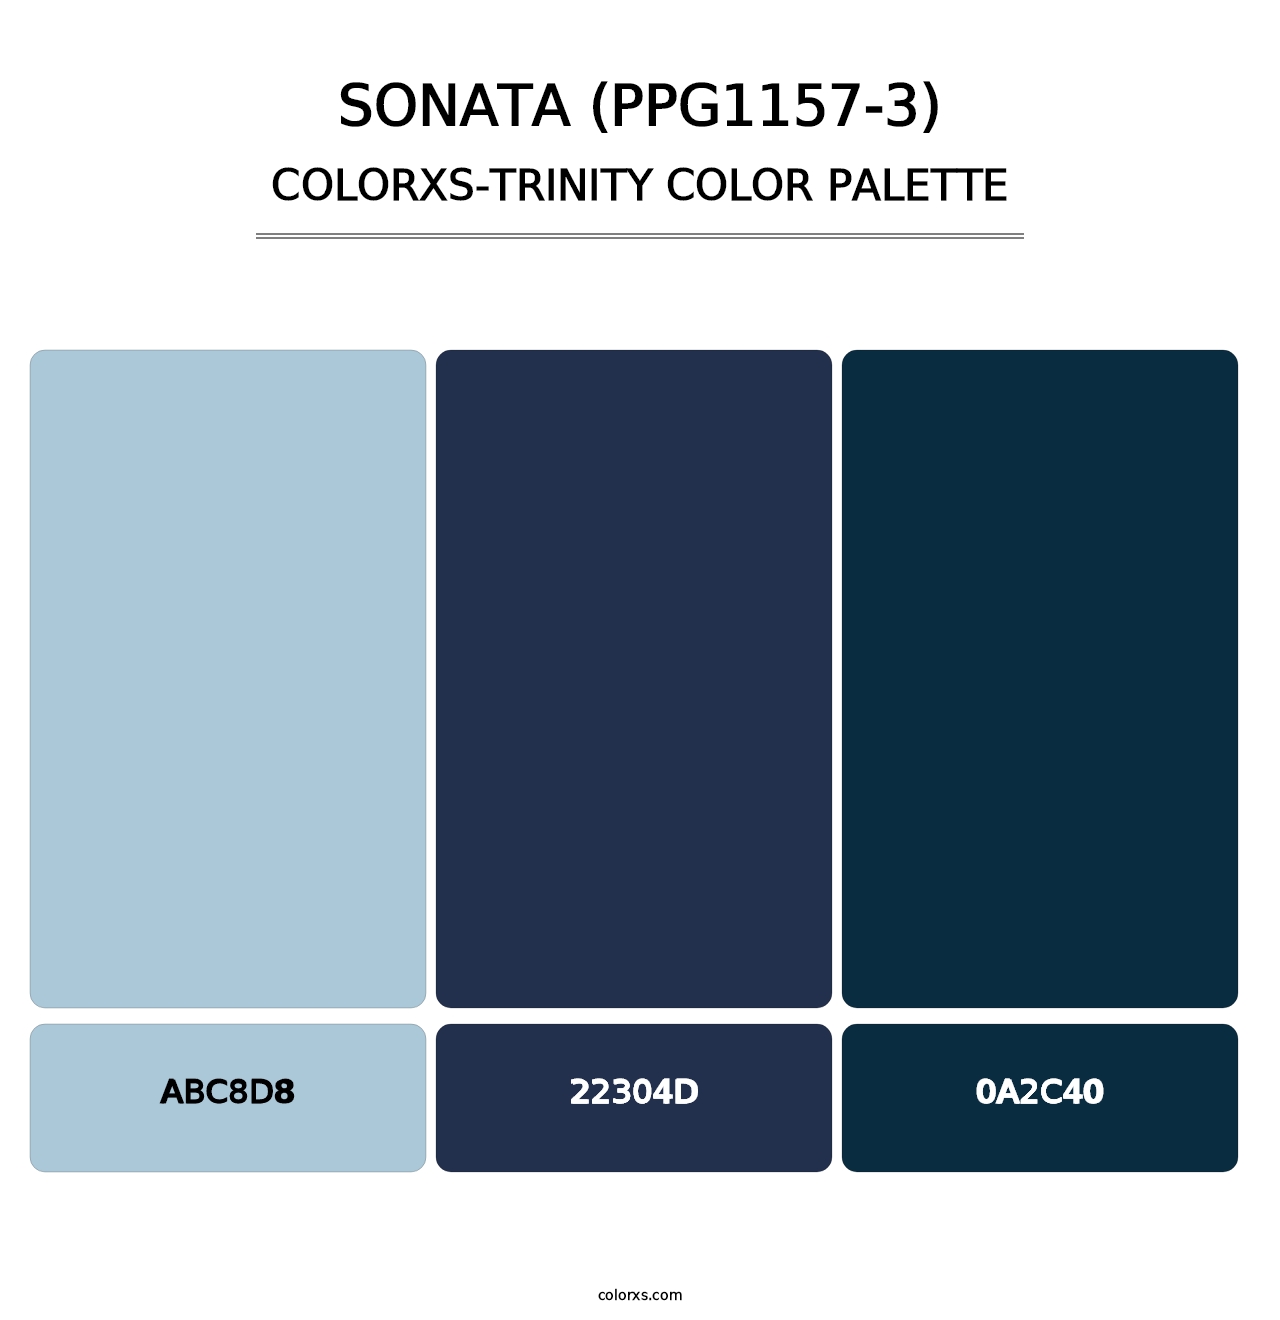 Sonata (PPG1157-3) - Colorxs Trinity Palette